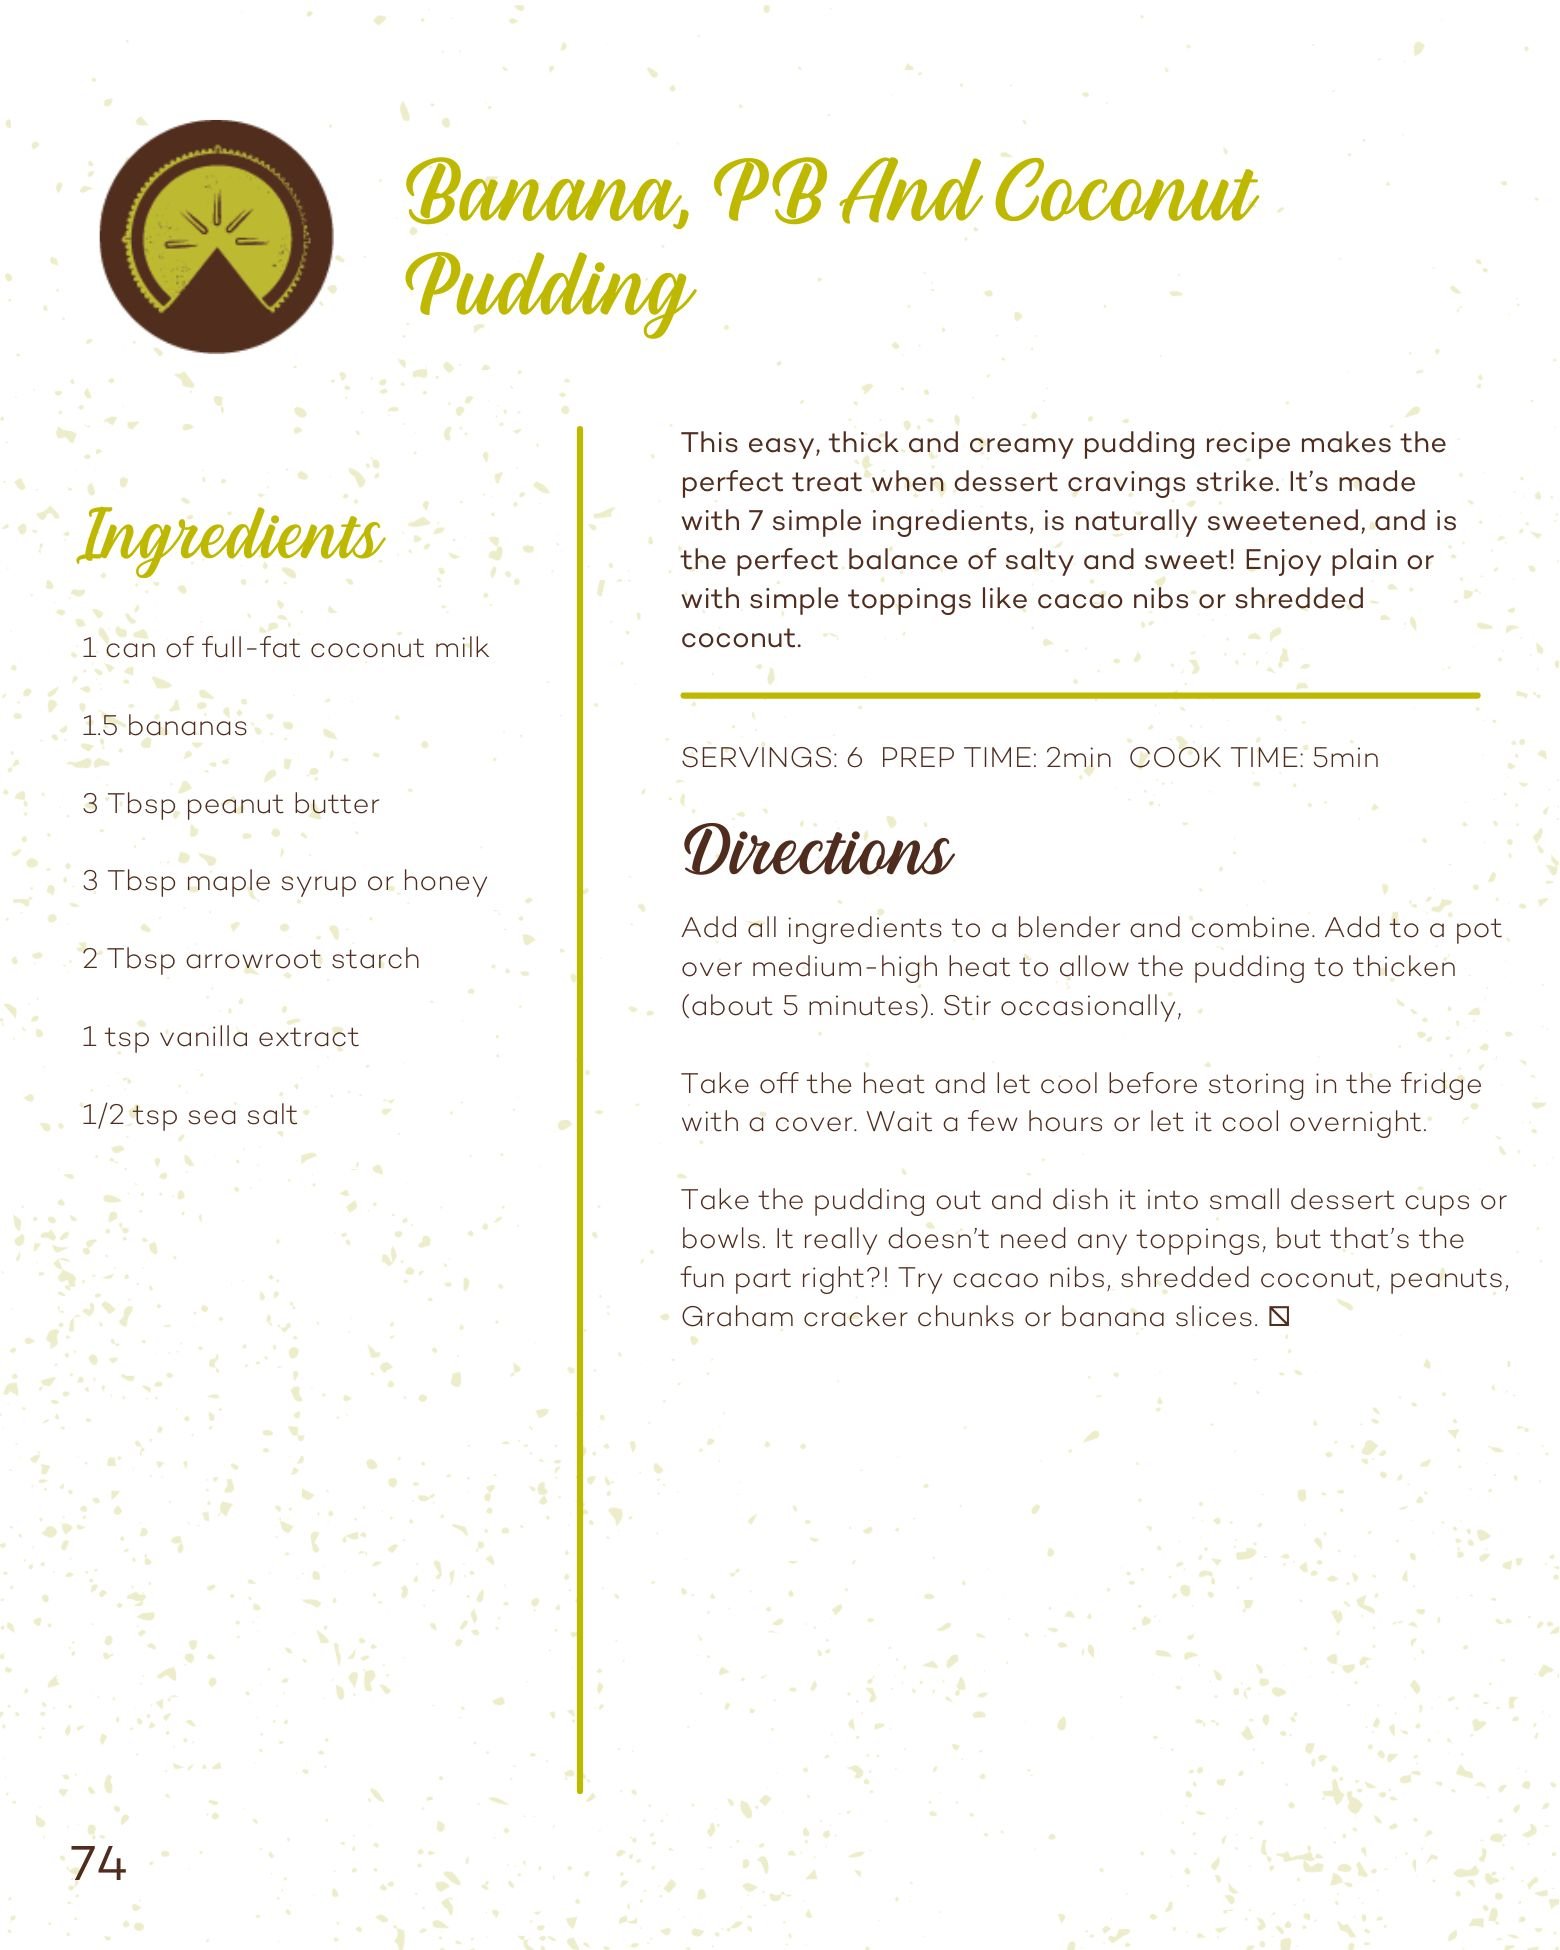 Banana, PB and Coconut Pudding Recipe